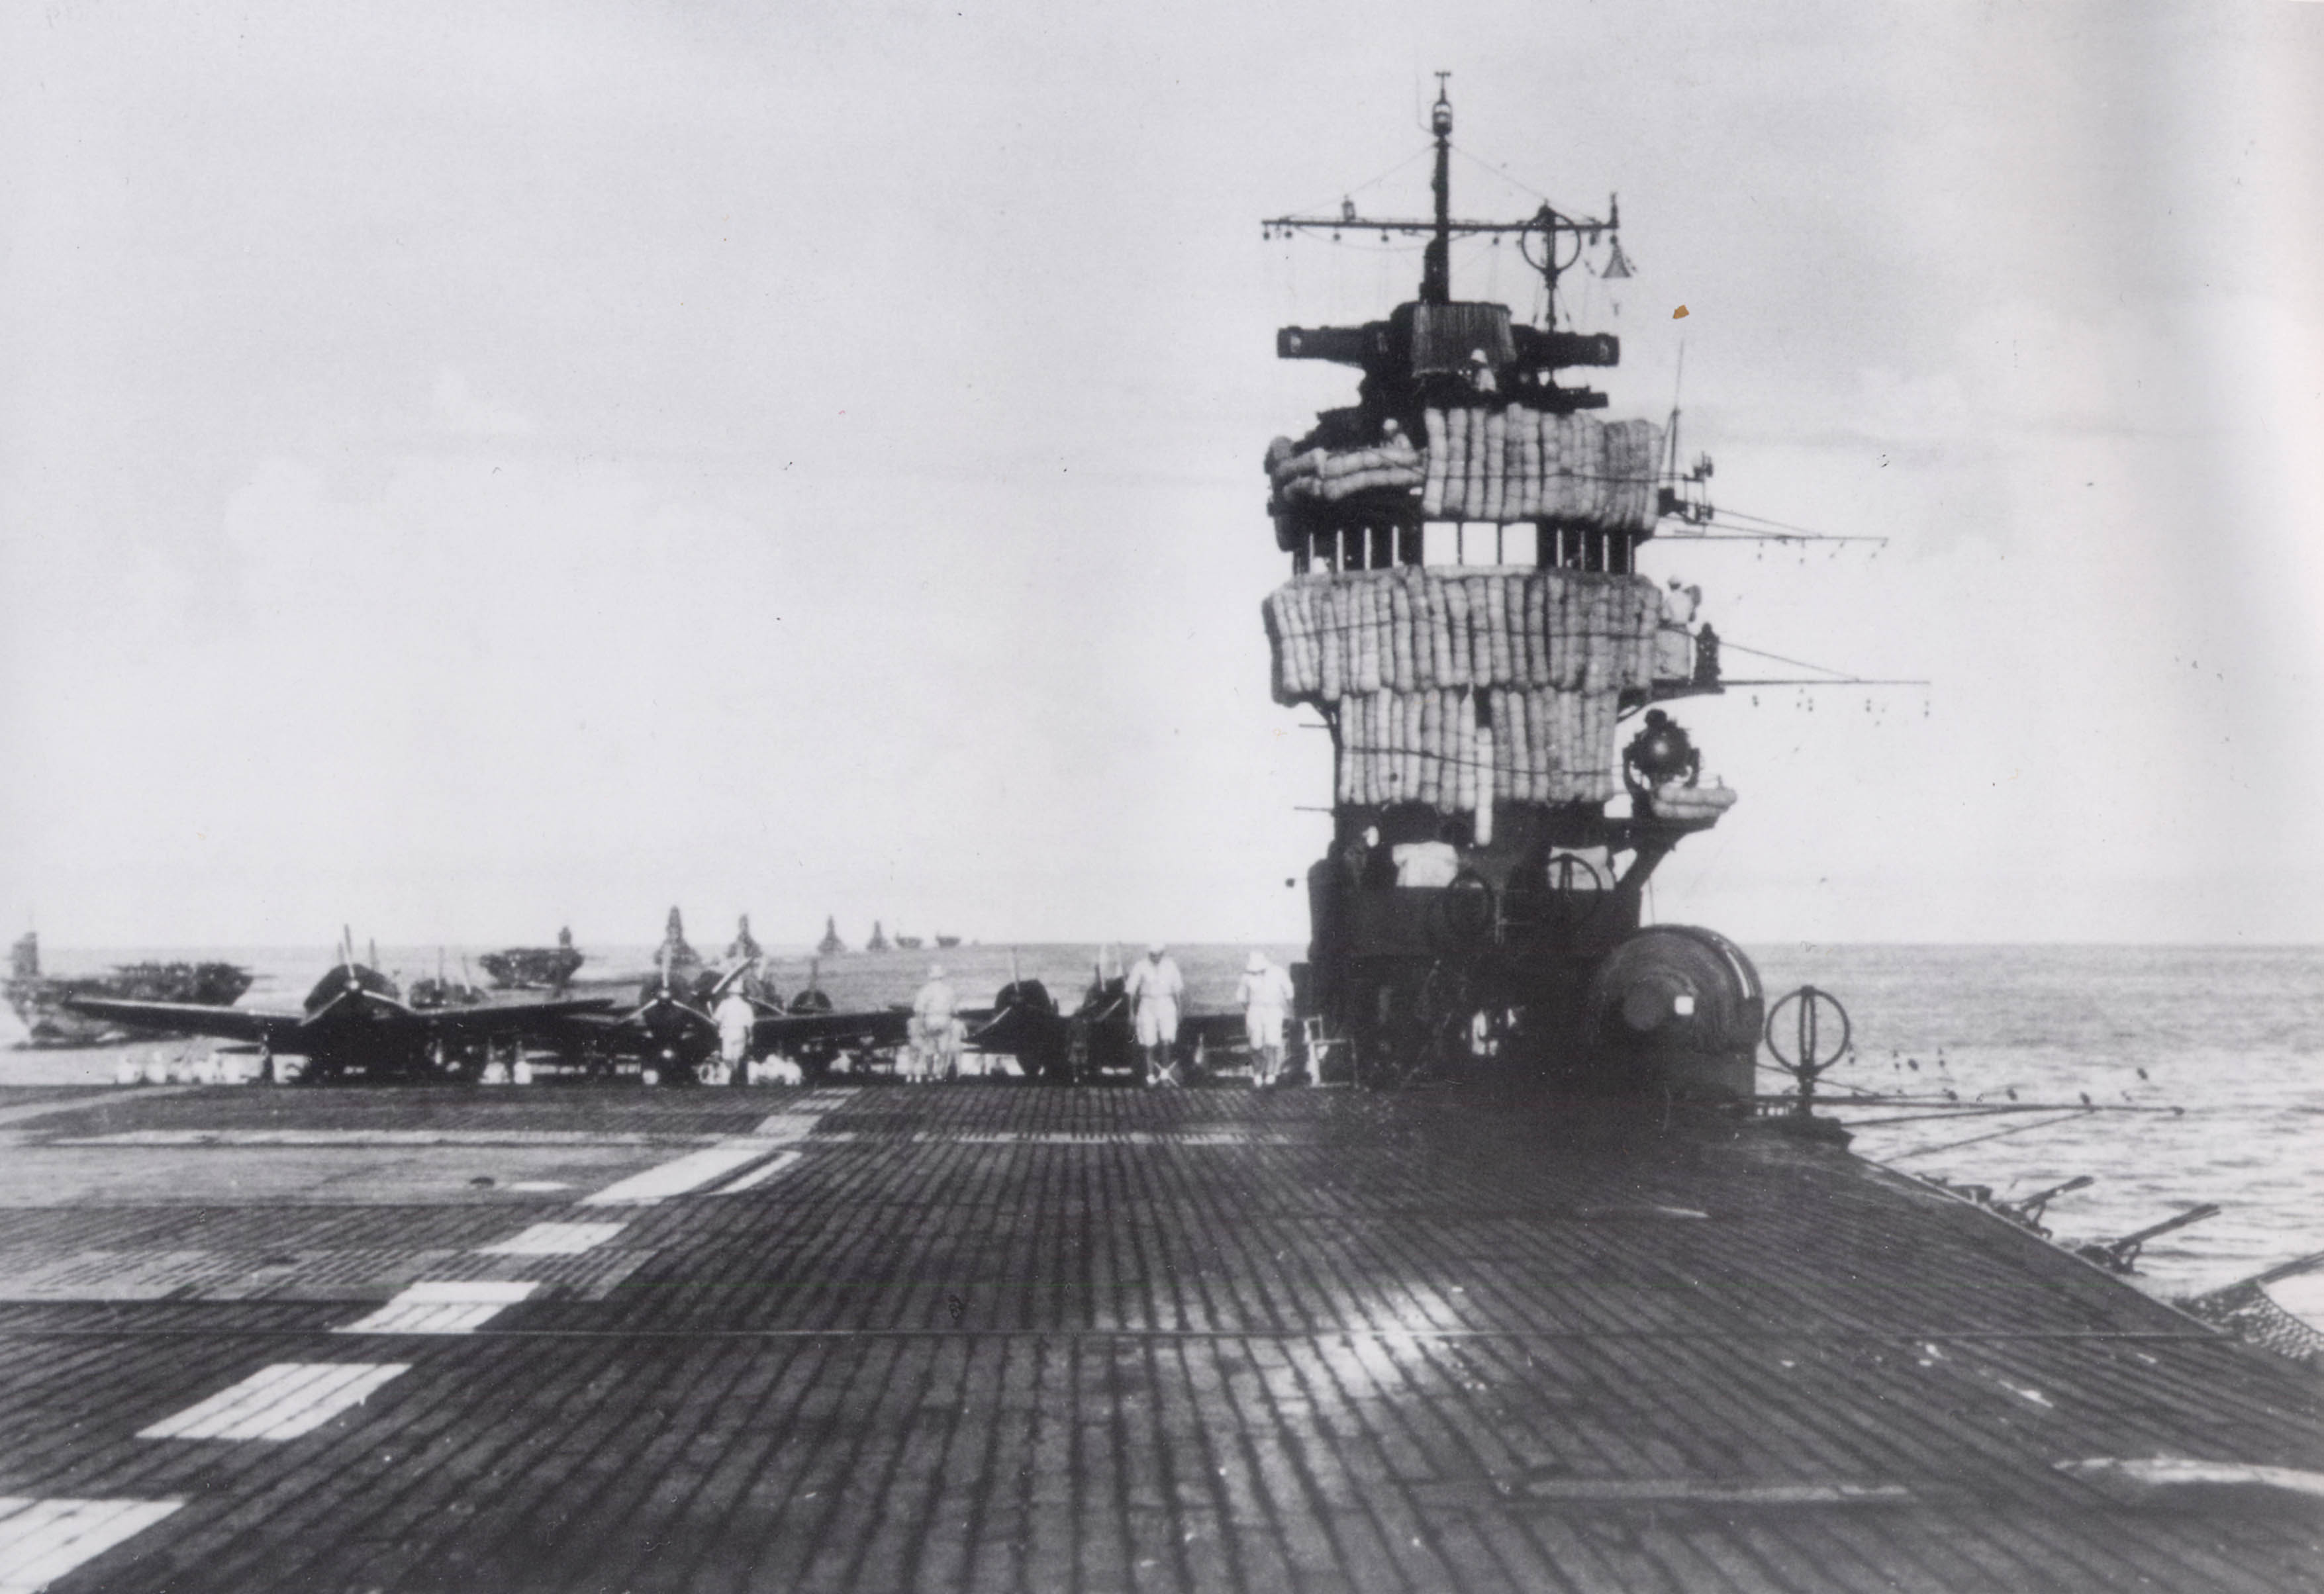 File:Japanese aircraft carrier Akagi Deck.jpg - Wikipedia